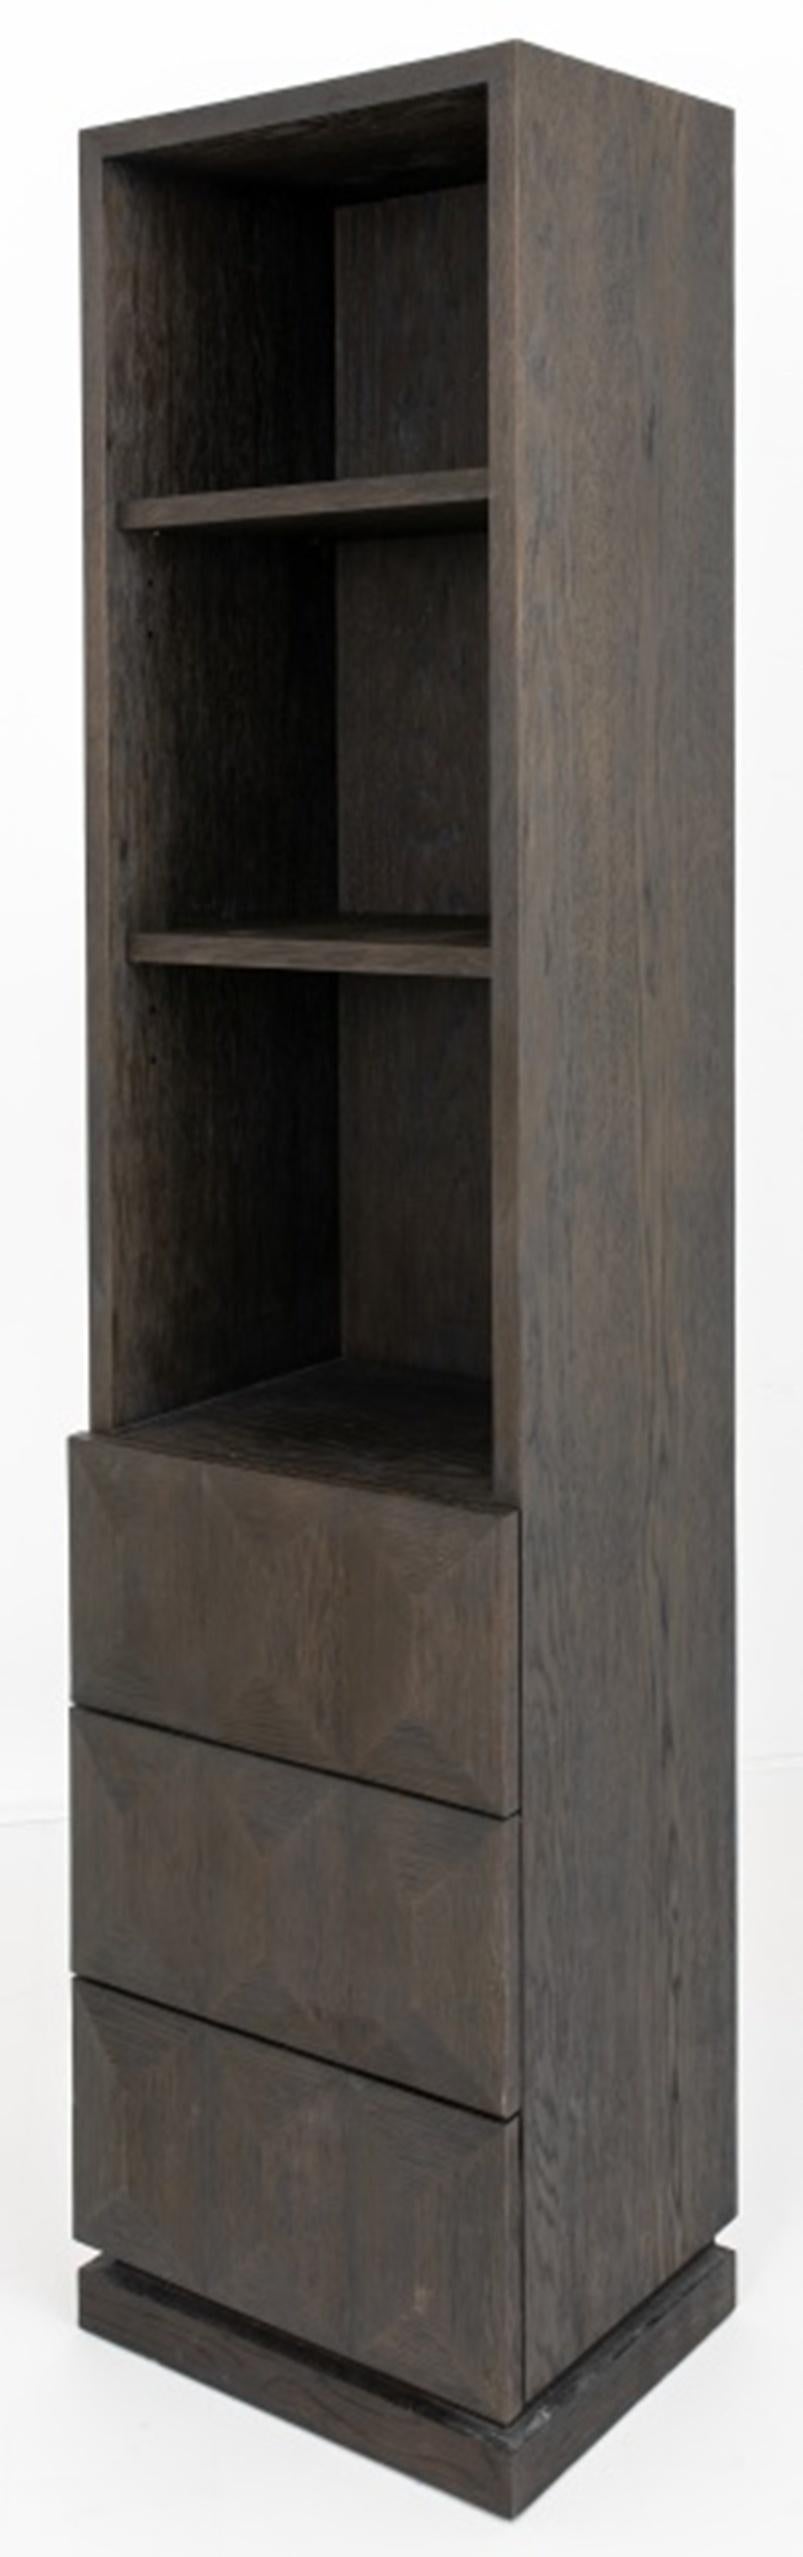 Richard Forwood RH 'Geometric' Bookcase